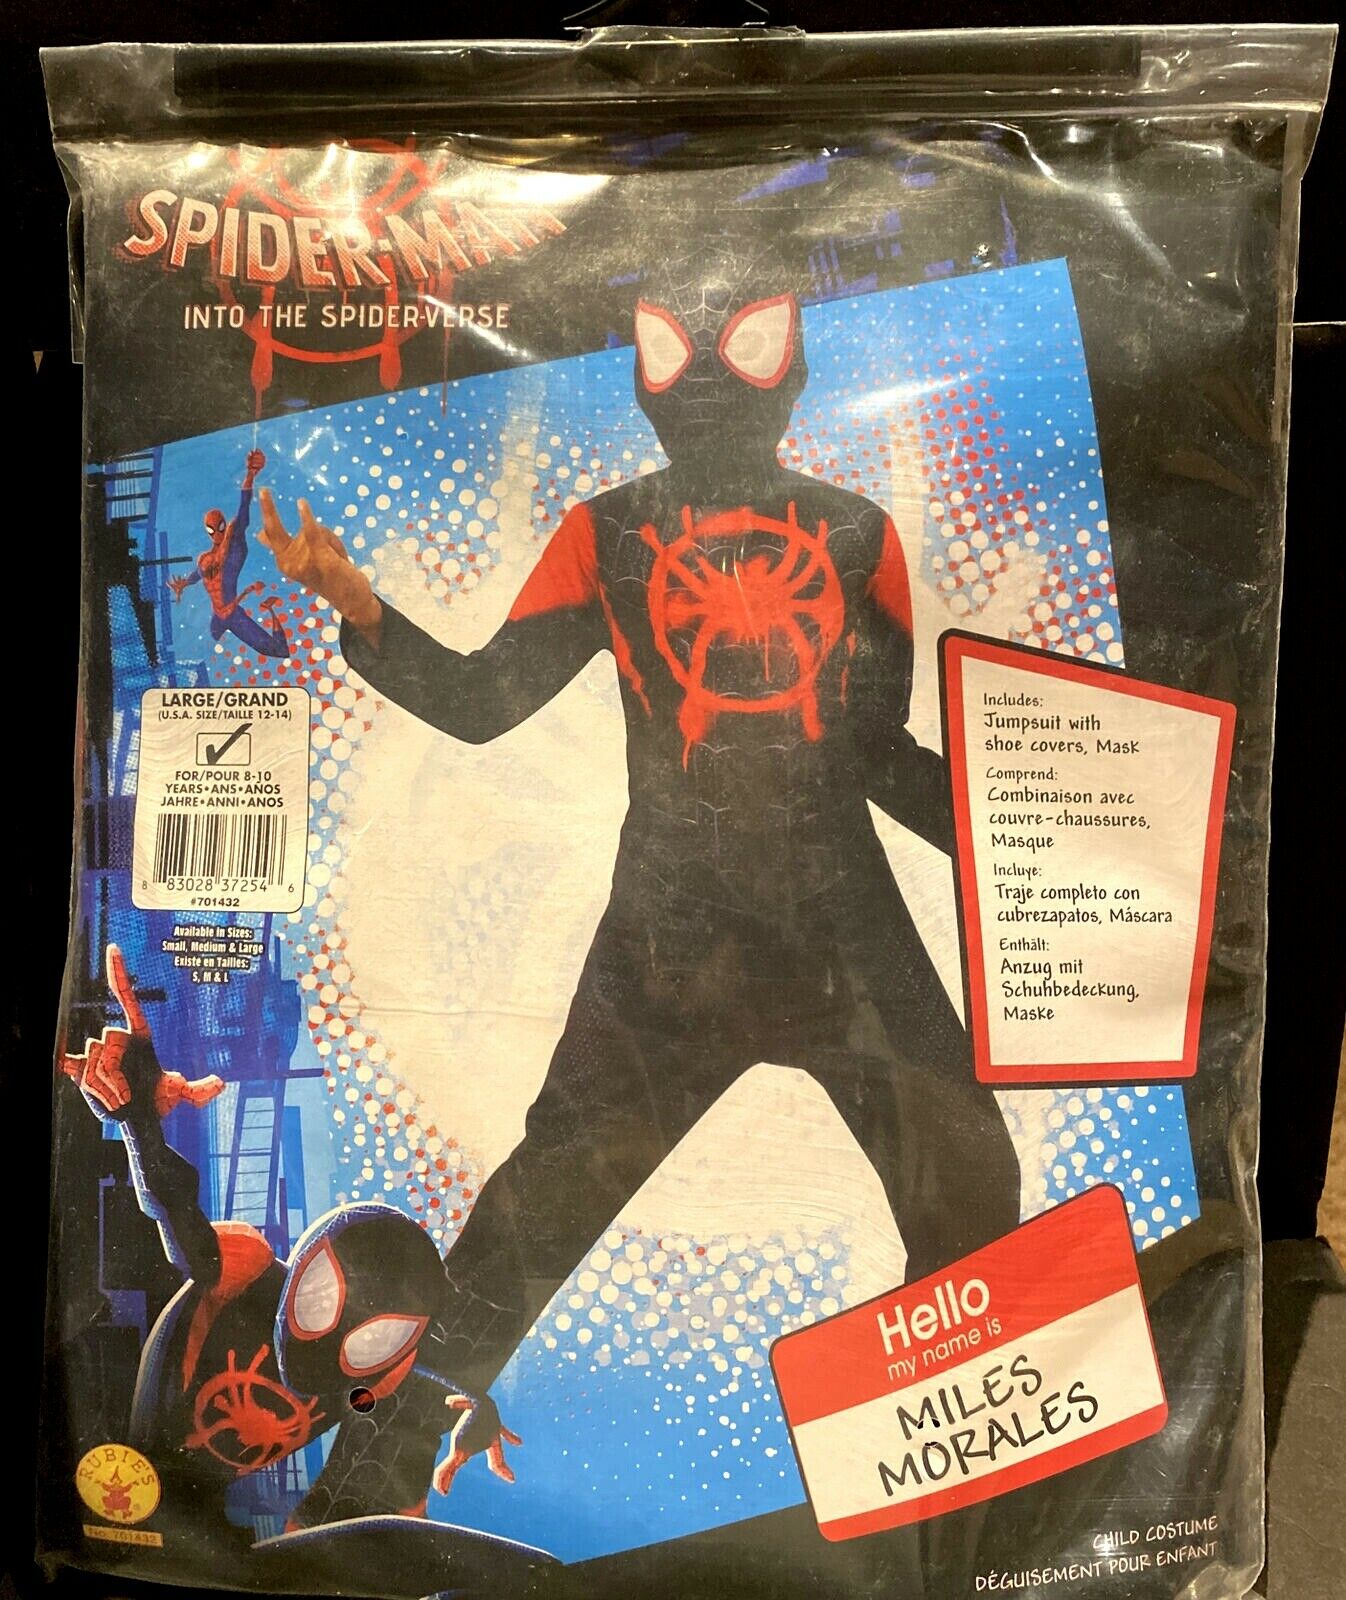 Miles Morales Spider-Man Costume for Kids